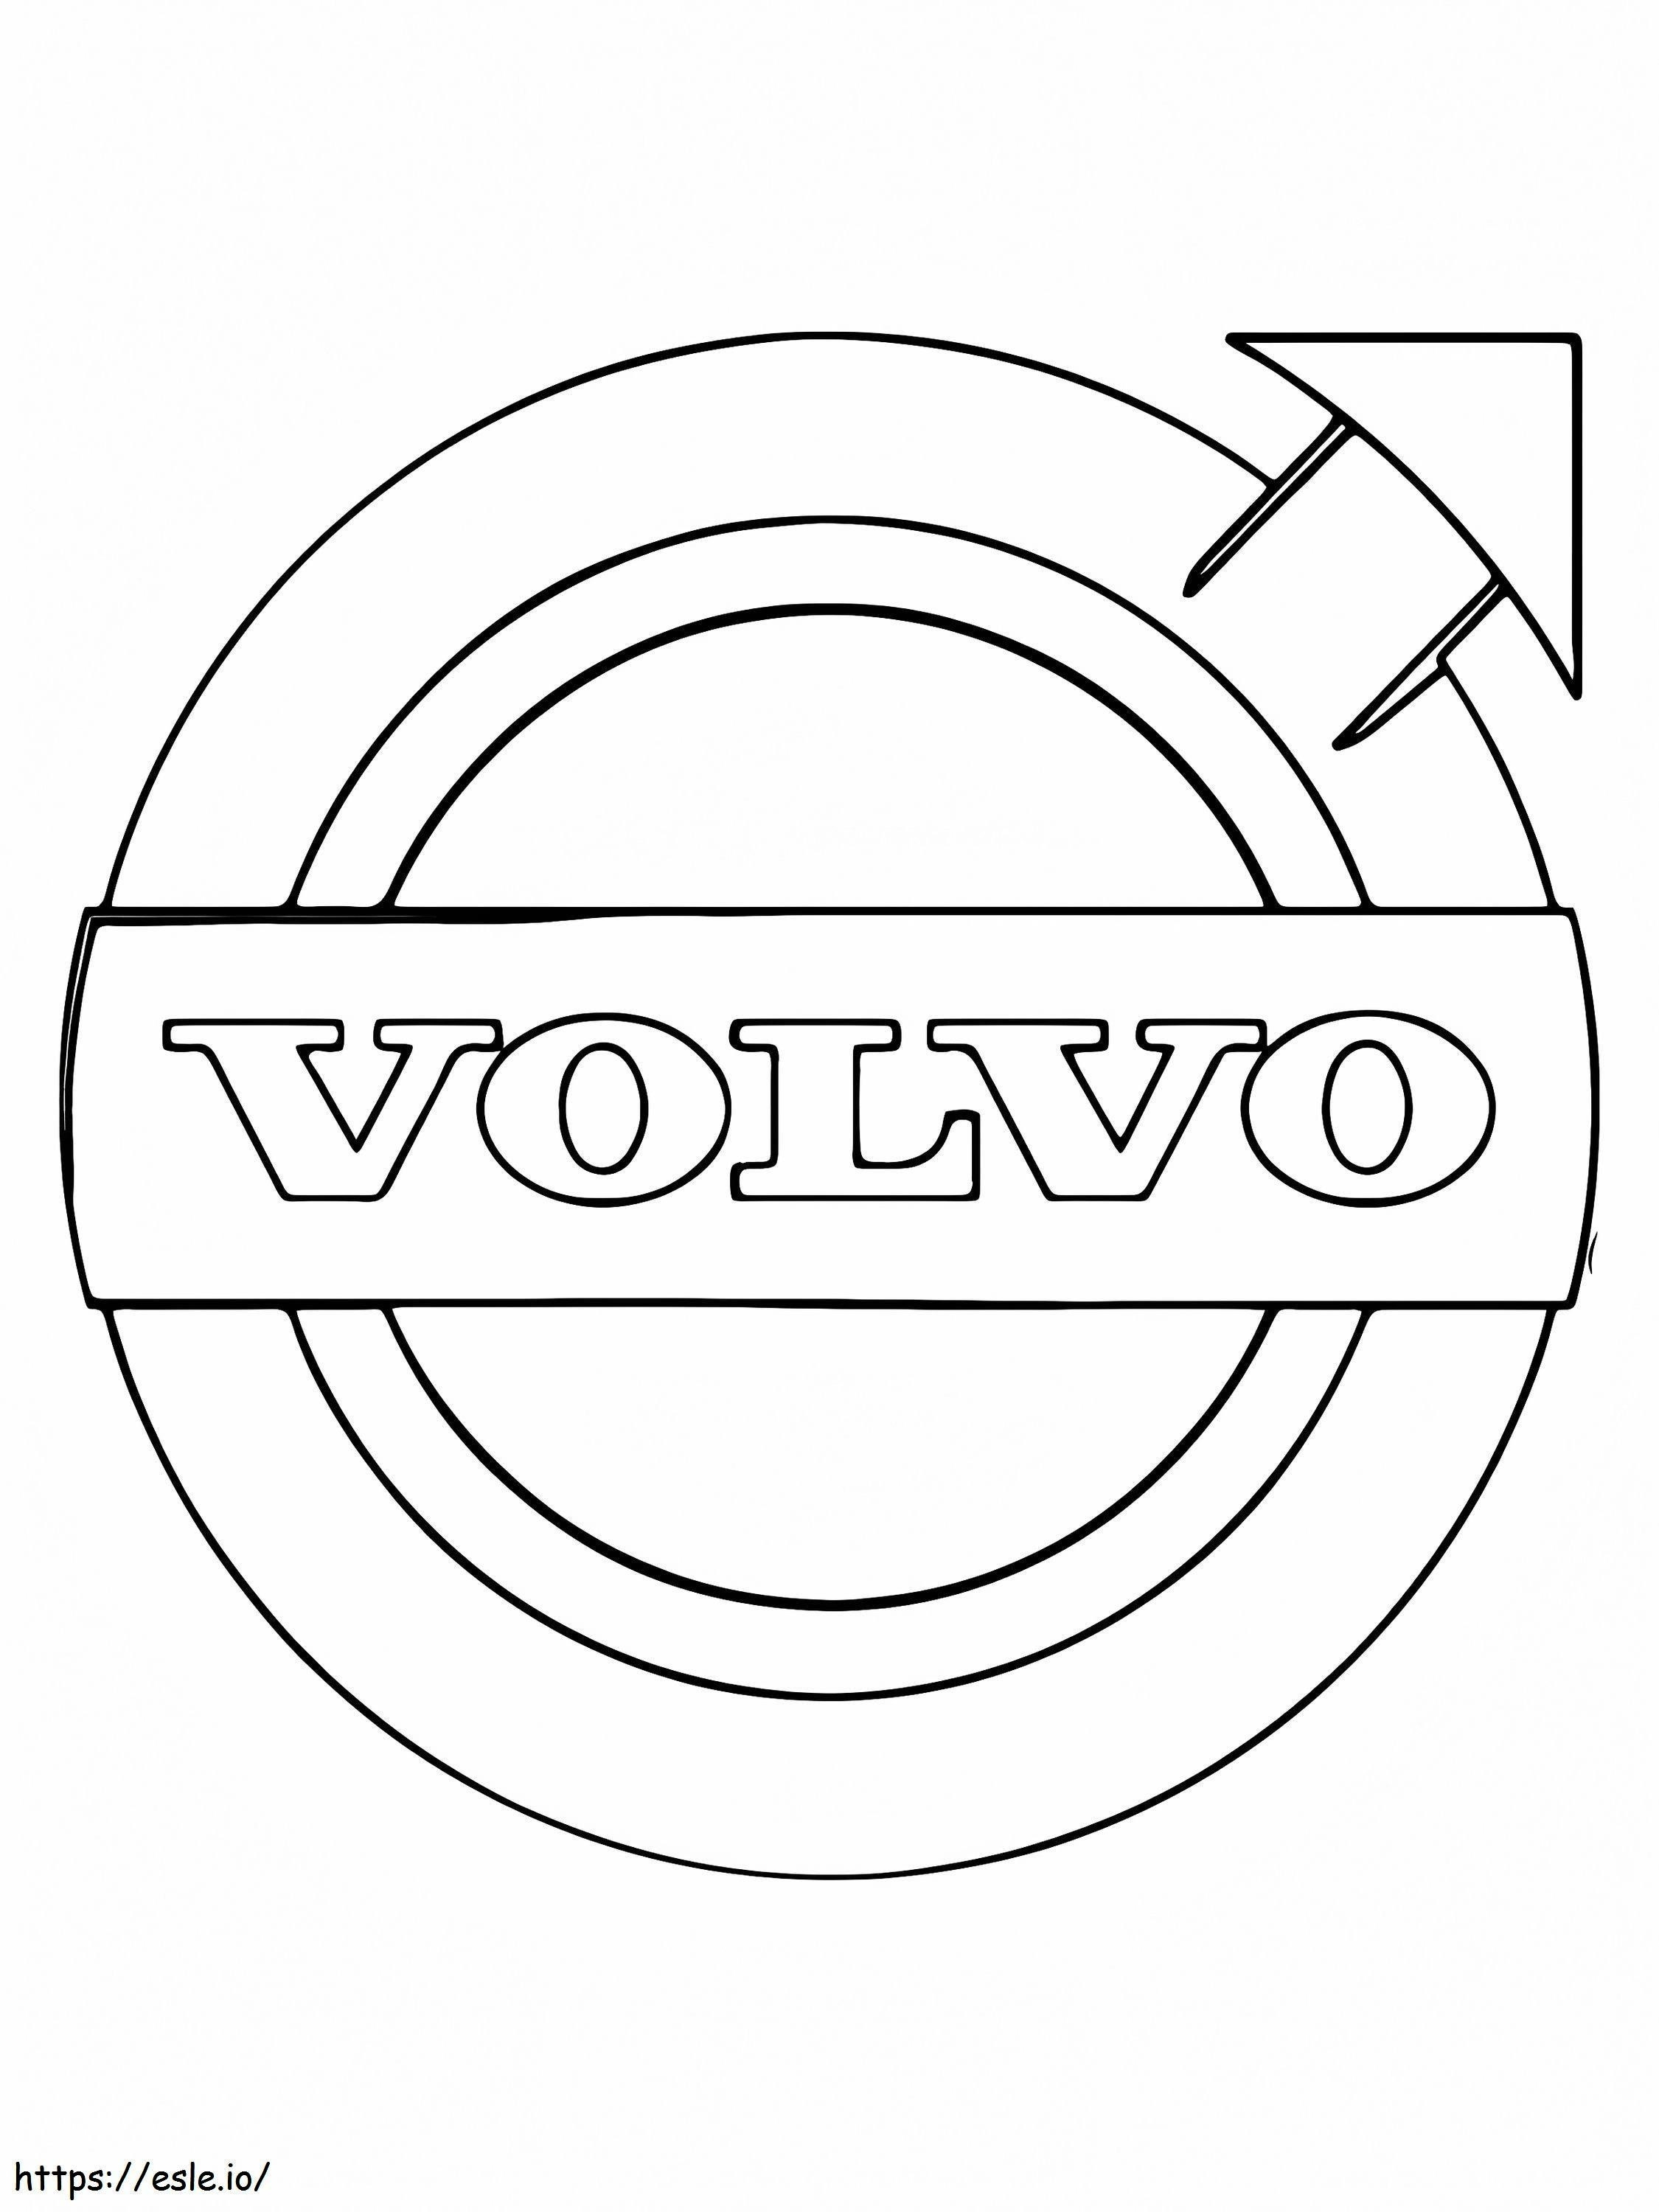 Logotipo do carro Volvo para colorir